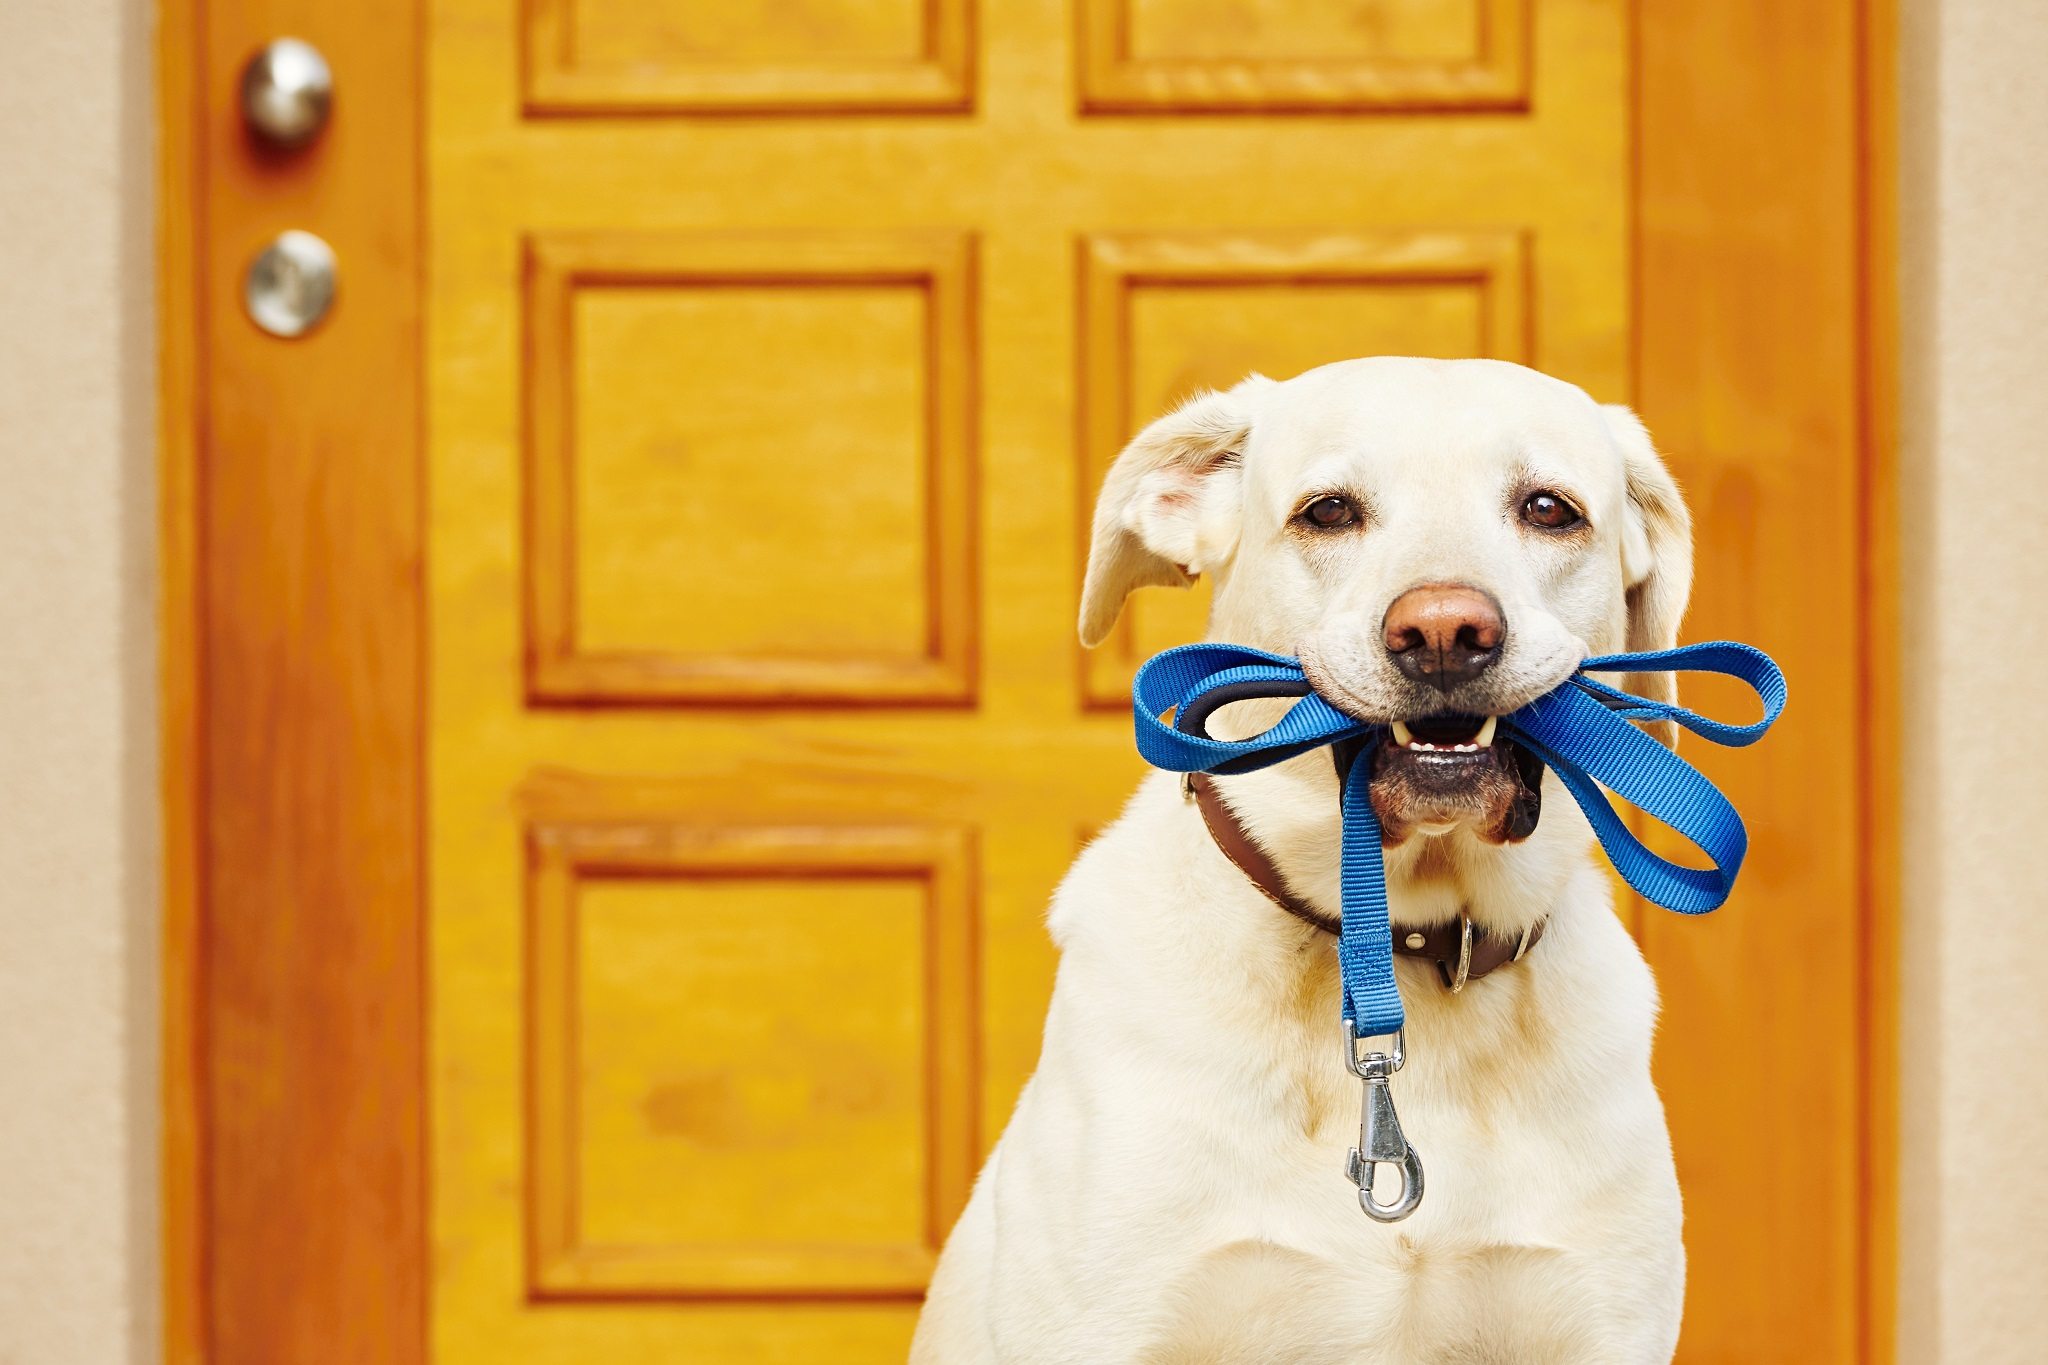 Dog with leash